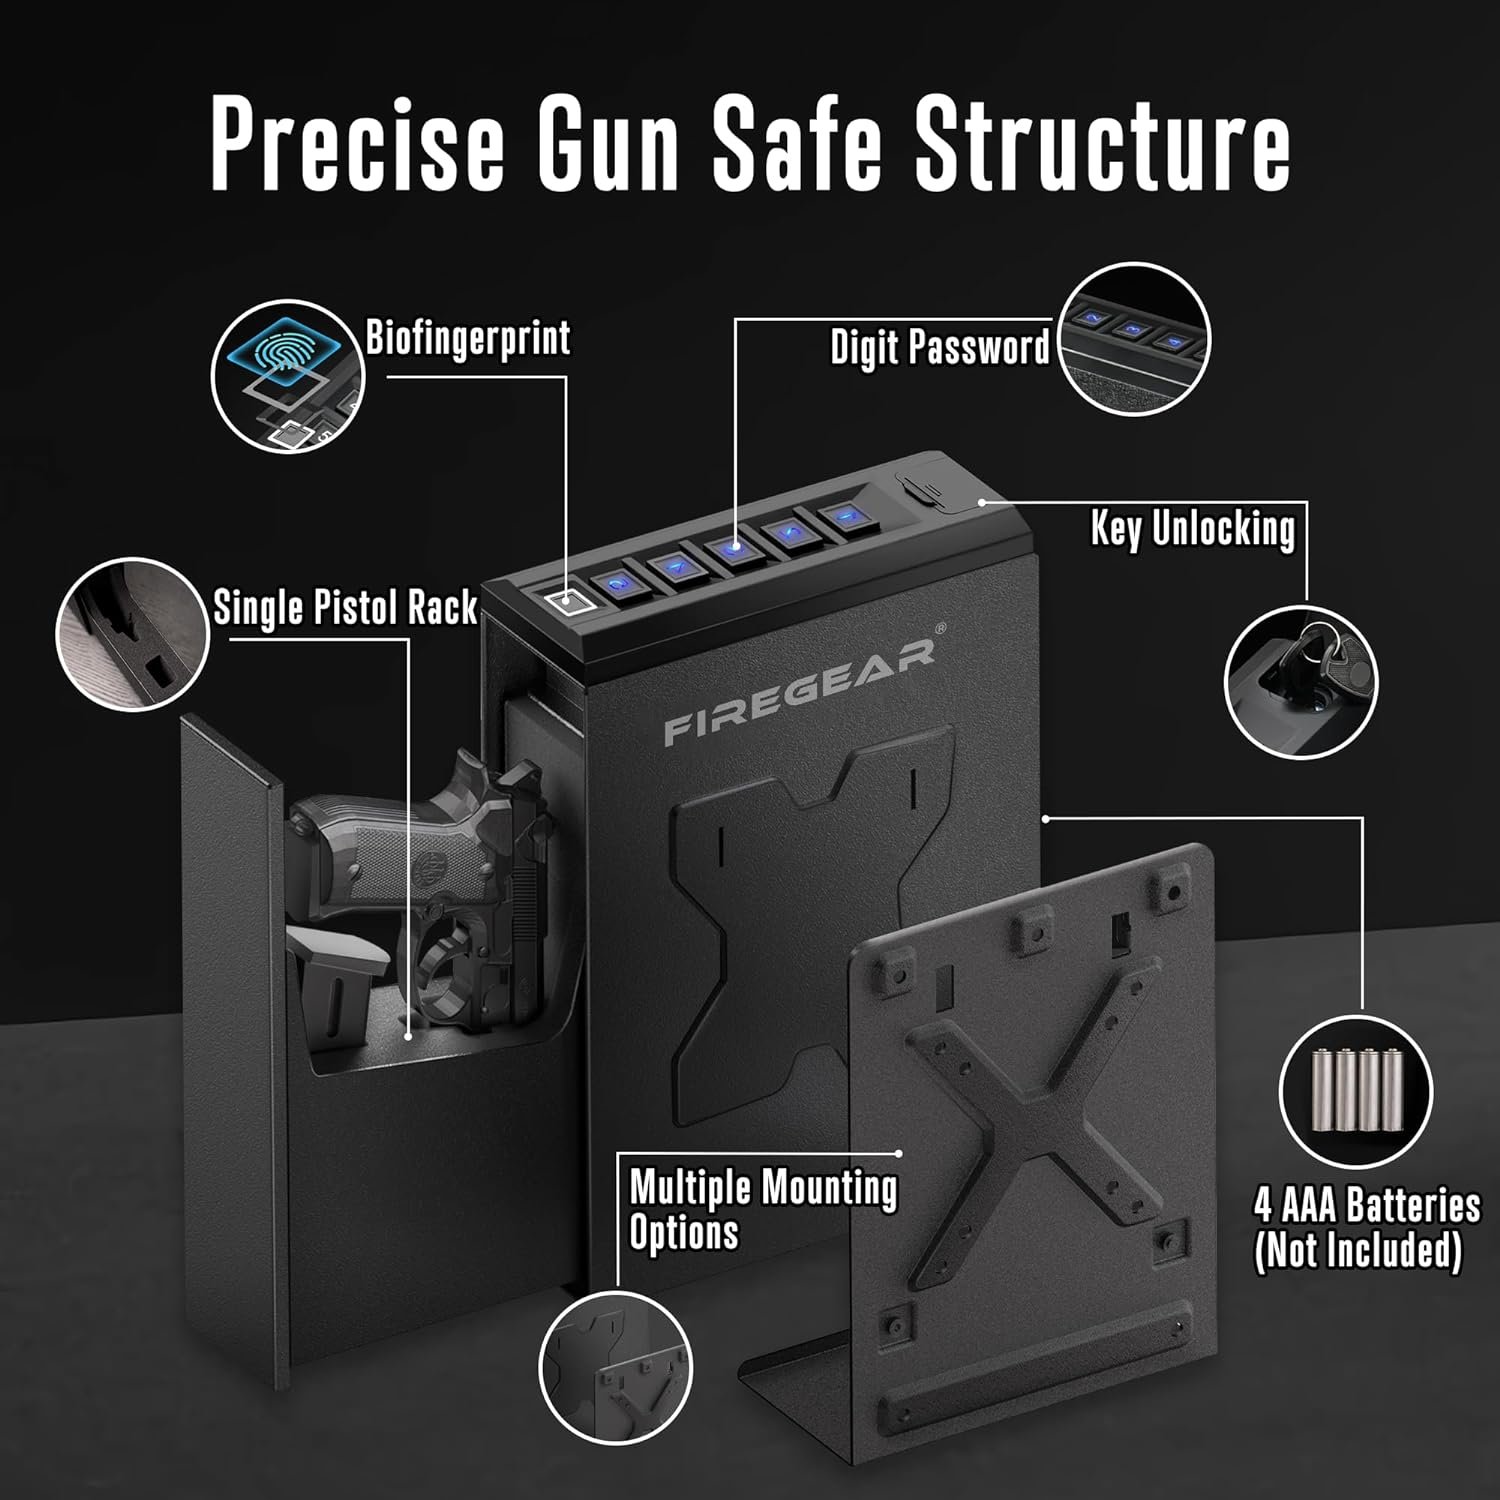 Biometric Pistol Safe Review